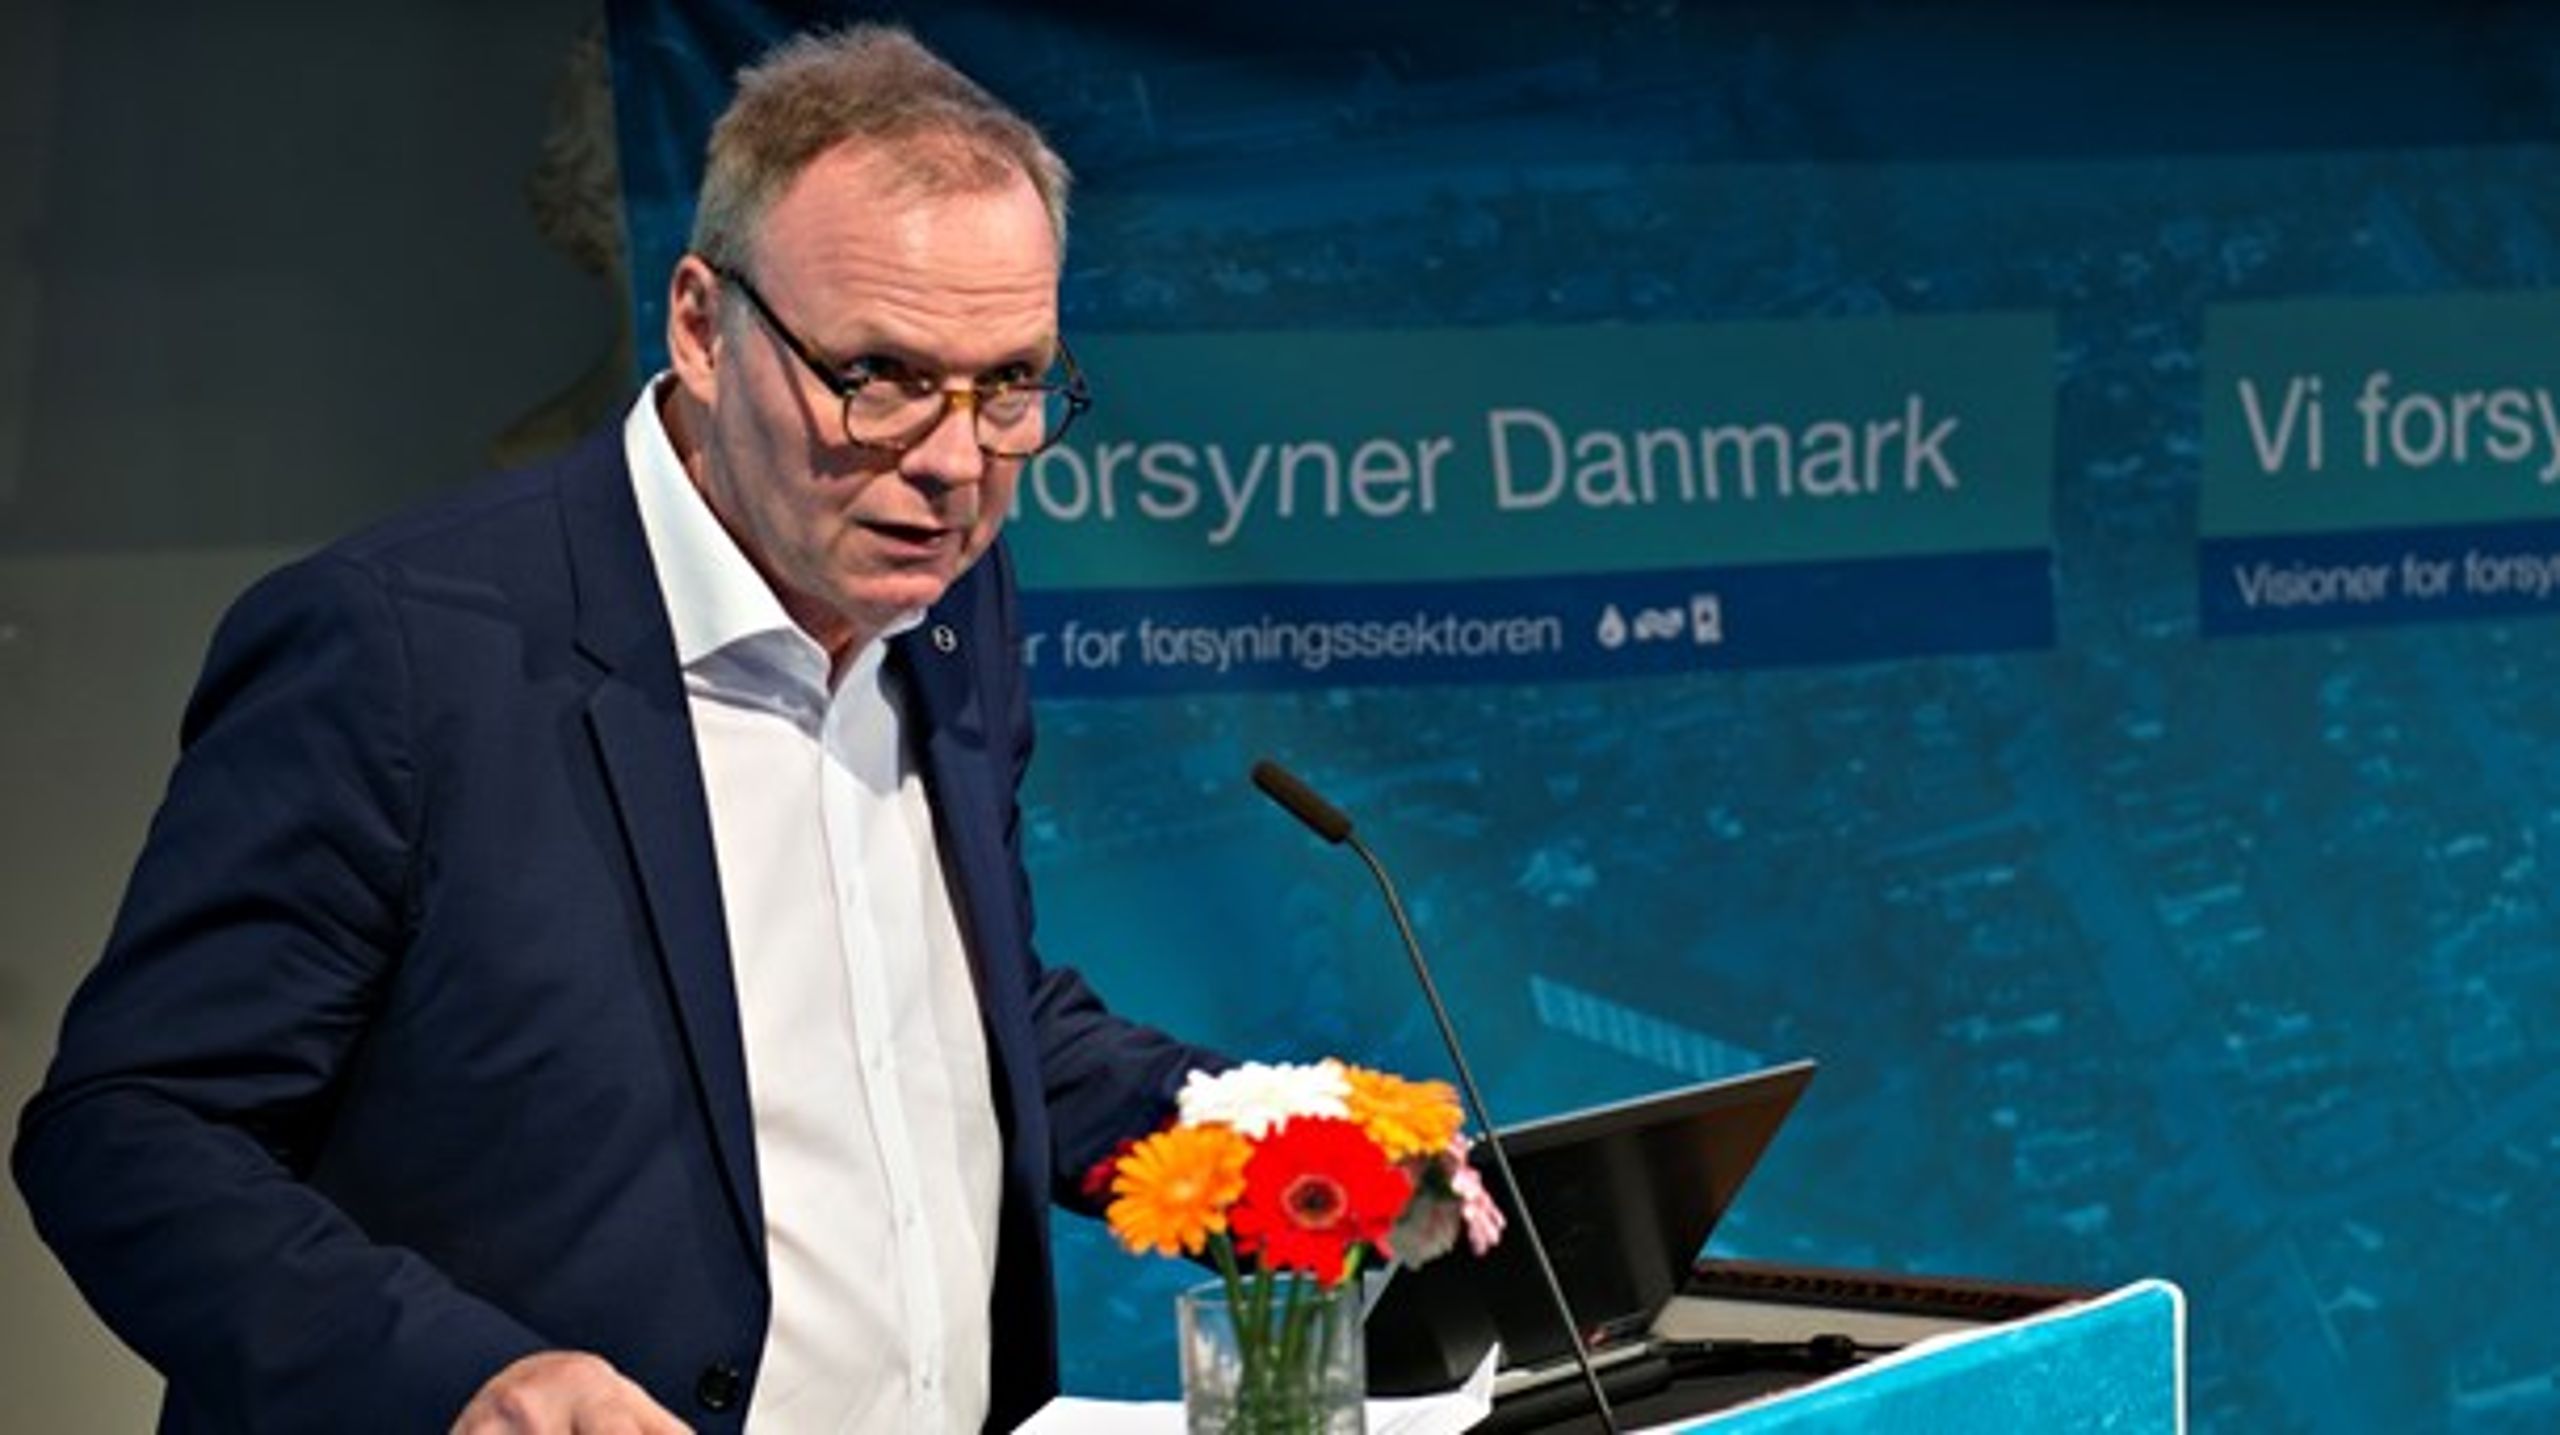 Lars Therkildsen fra Danva åbnede forsyningsdebatten på Nationalmuseet.